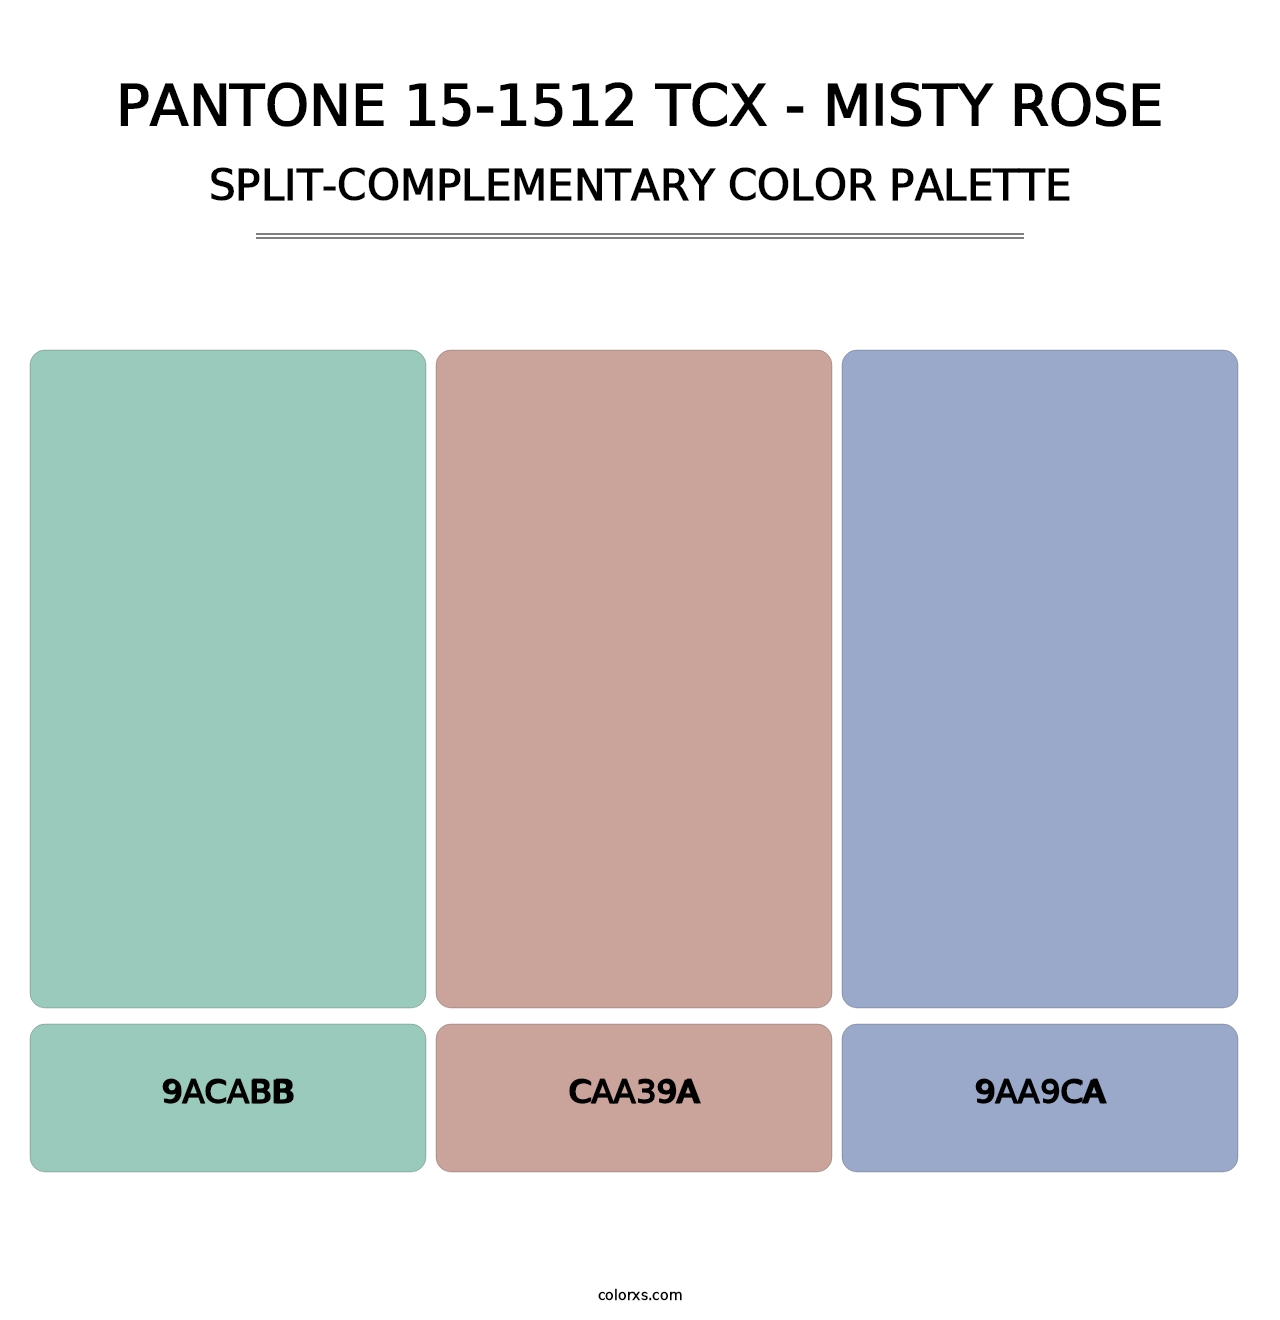 PANTONE 15-1512 TCX - Misty Rose - Split-Complementary Color Palette